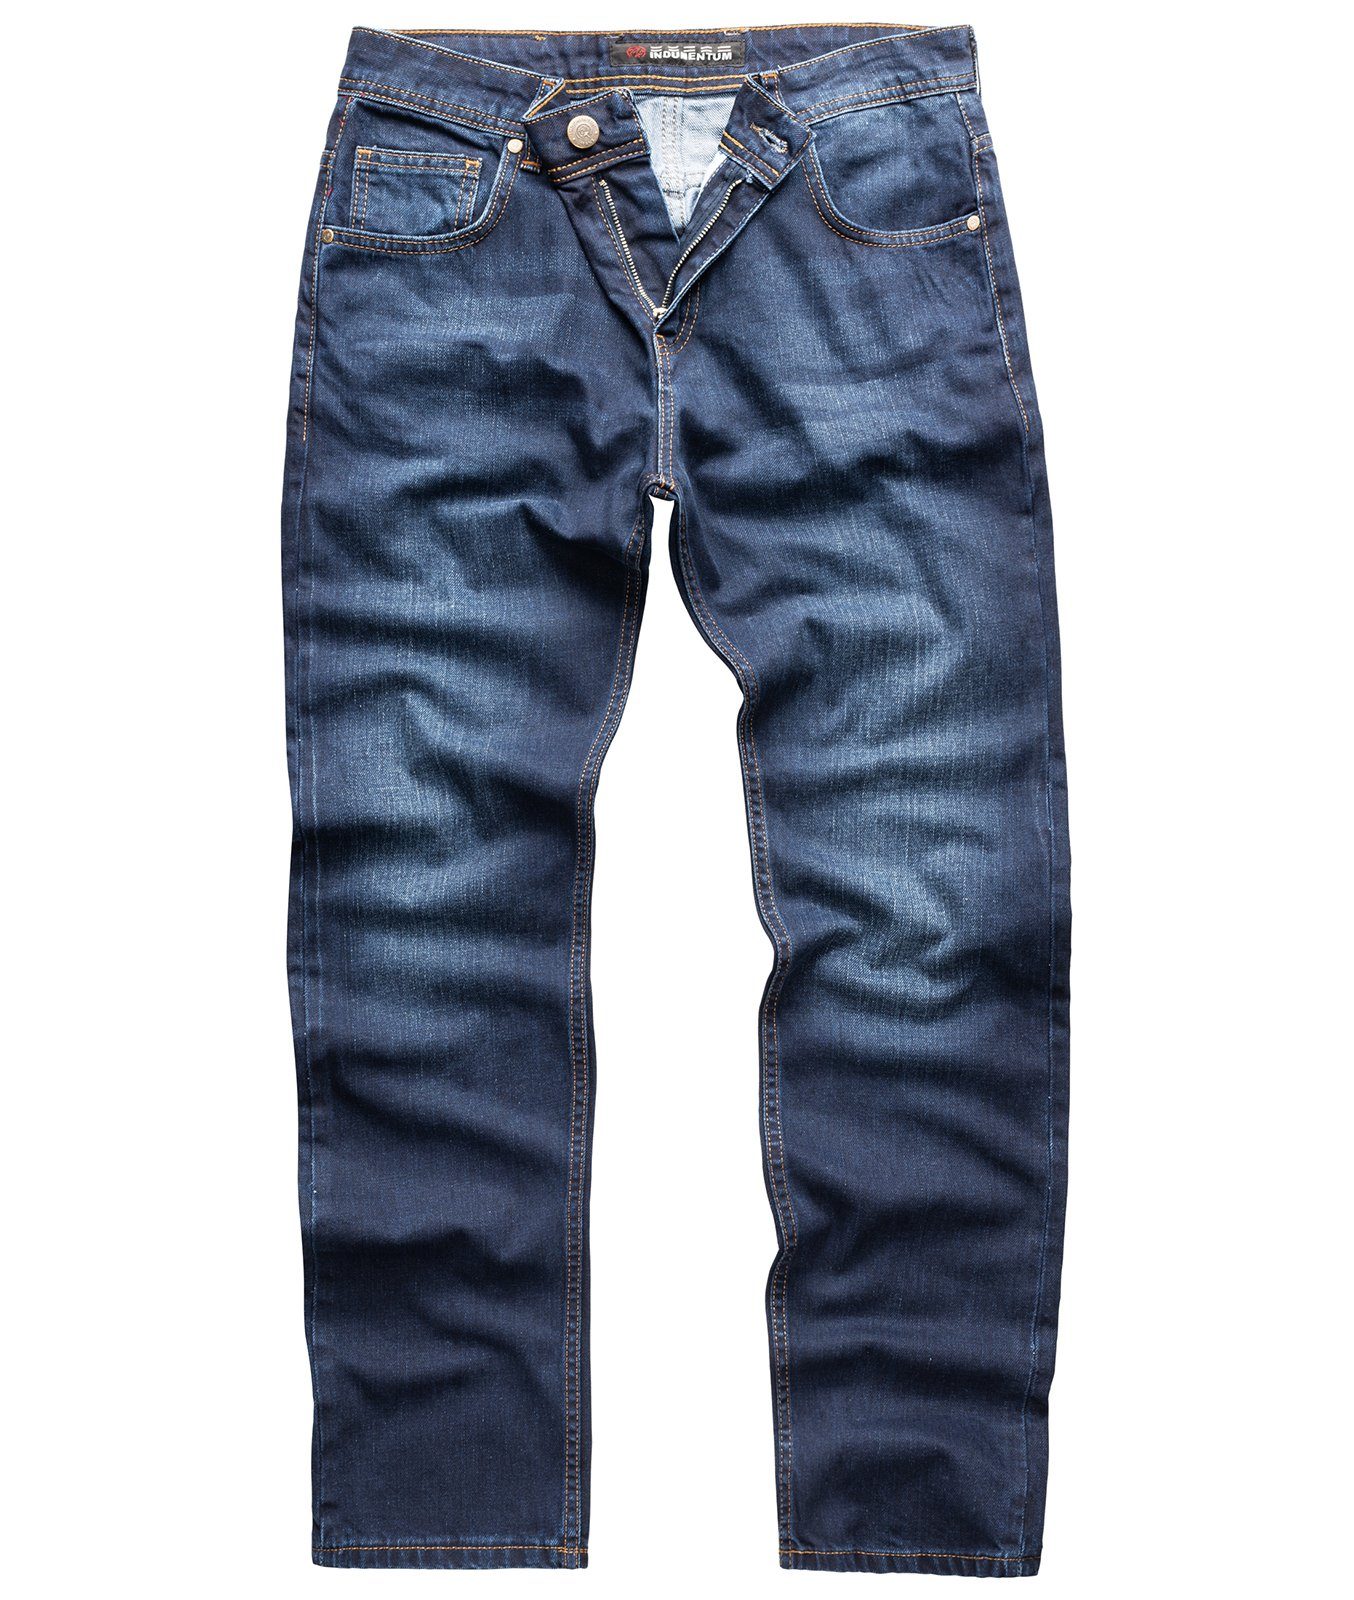 Fit Indumentum IC-700 Comfort Straight-Jeans Herren Jeans